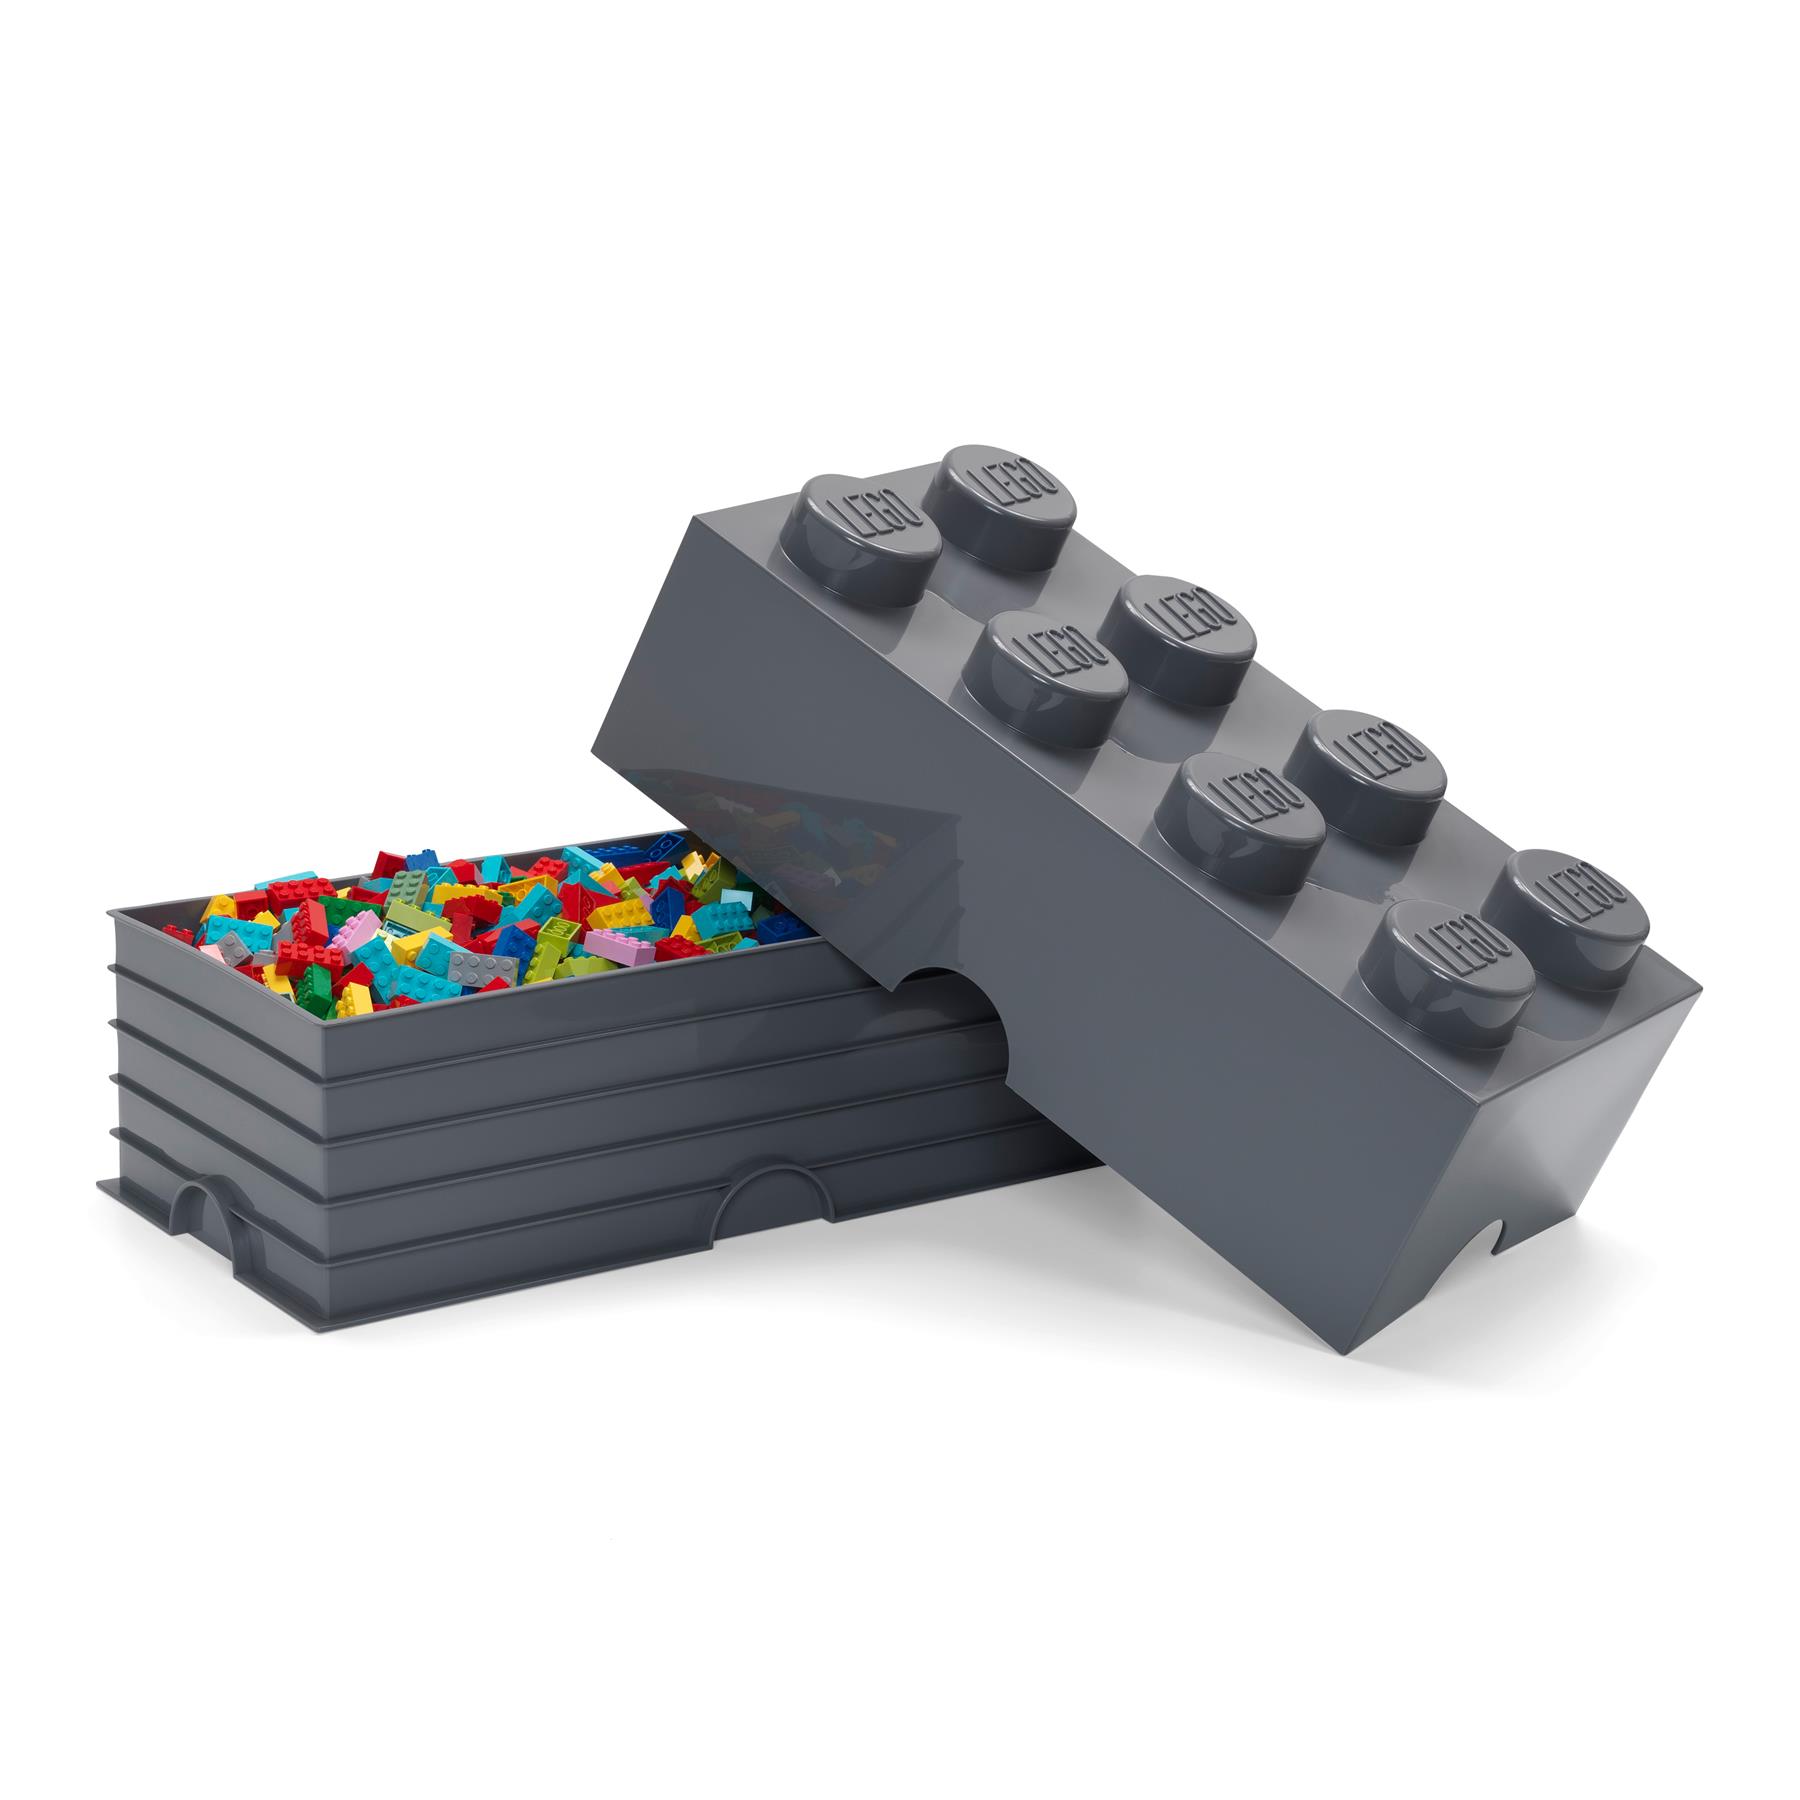 LEGO Opbergbox Brick 8 kopen? fonQ!